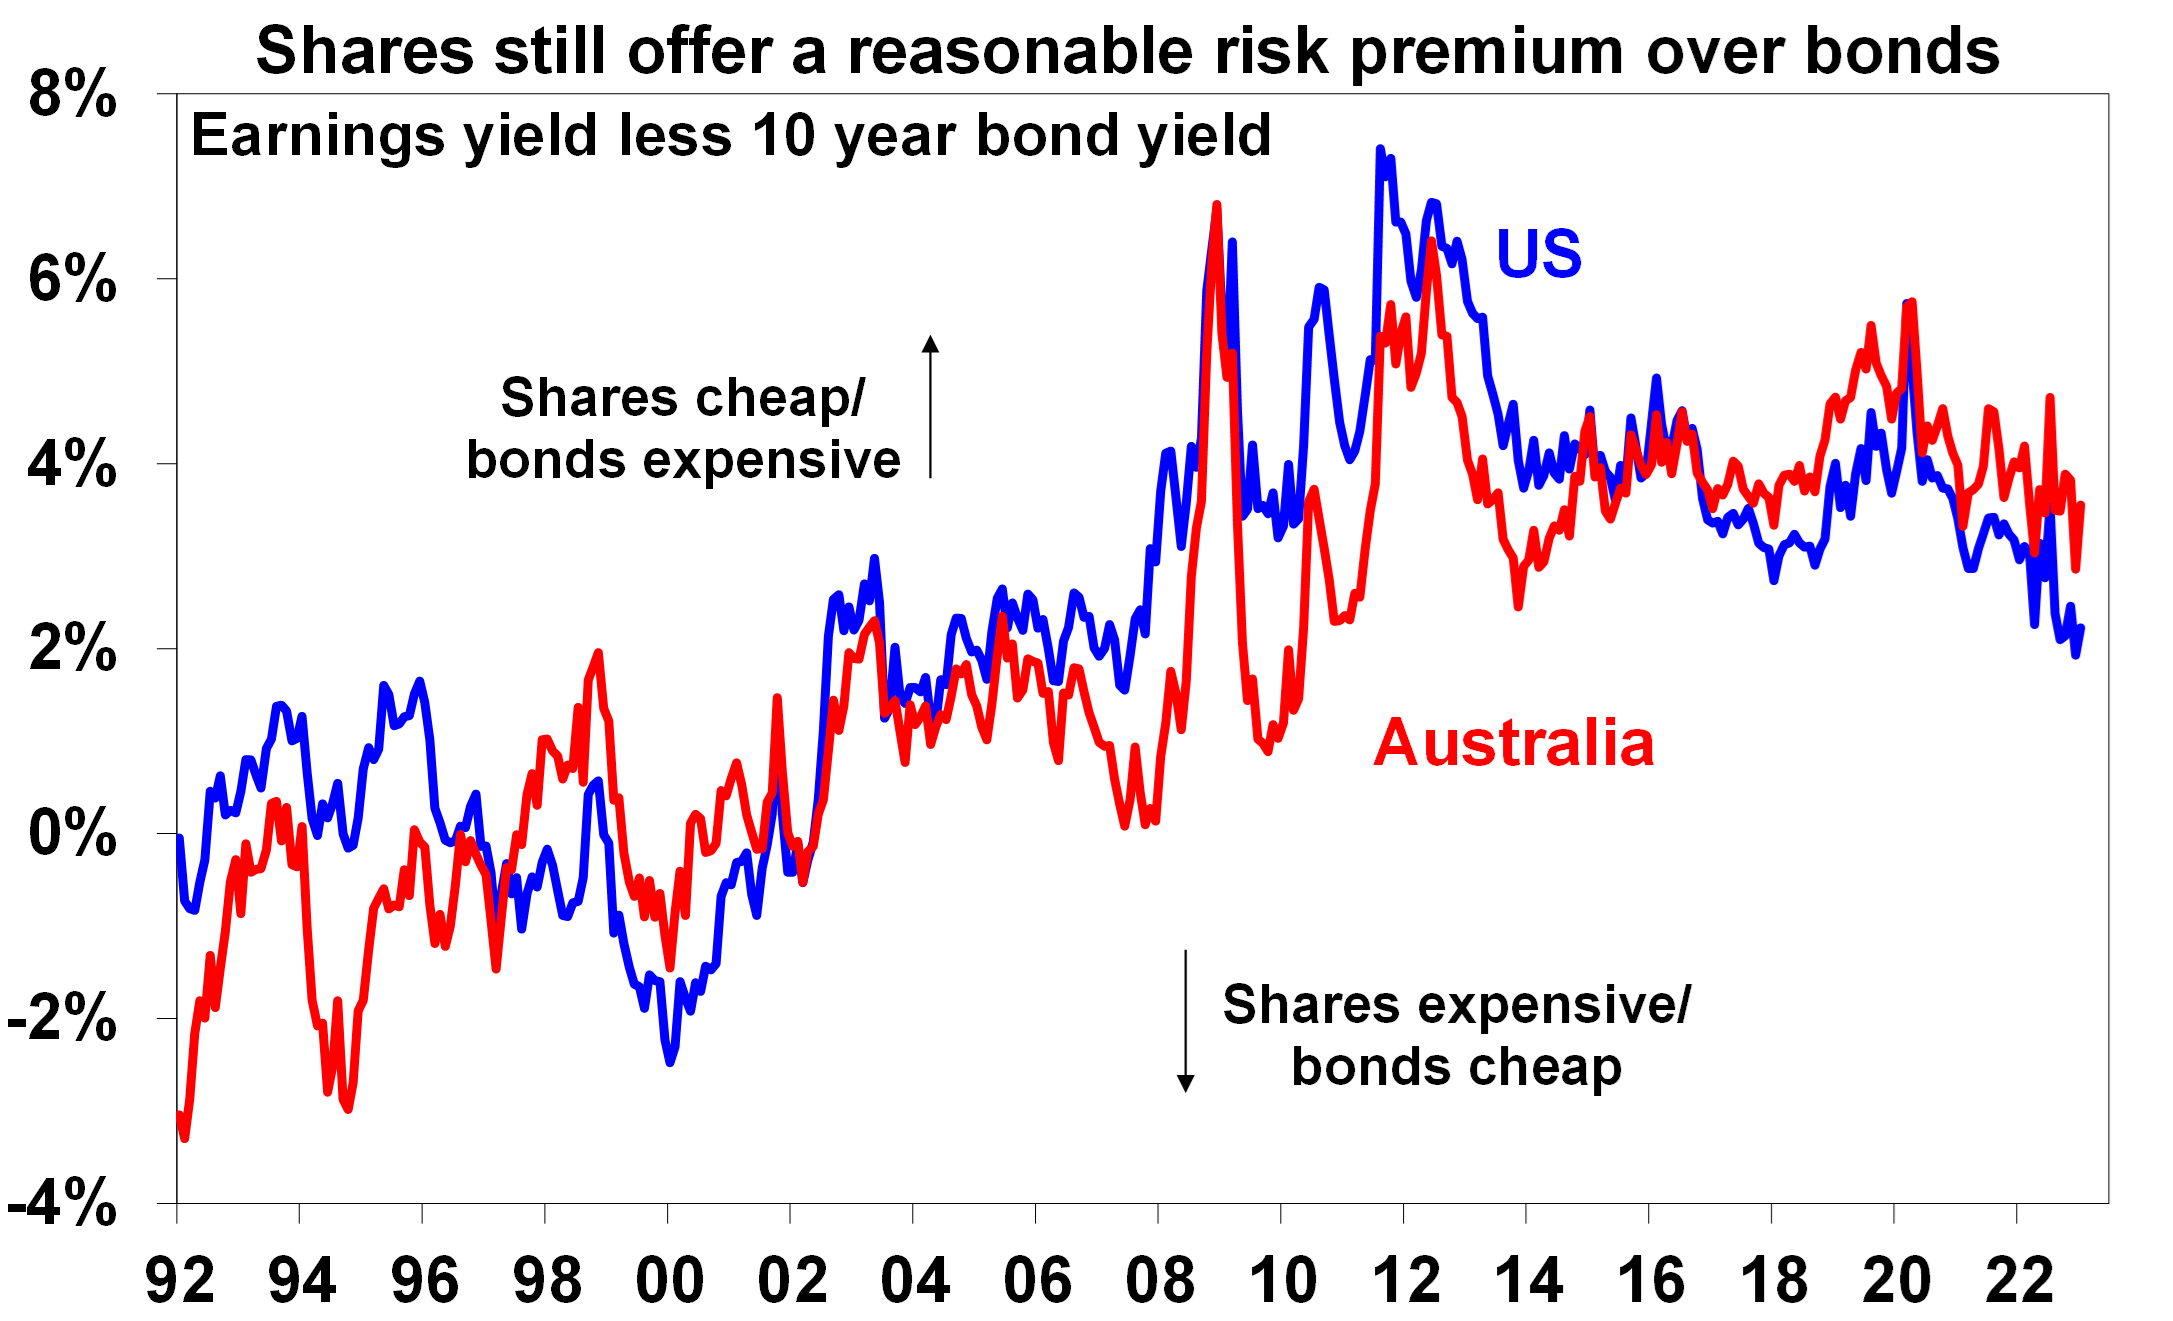 Shares still offer a reasonable risk premium over bonds